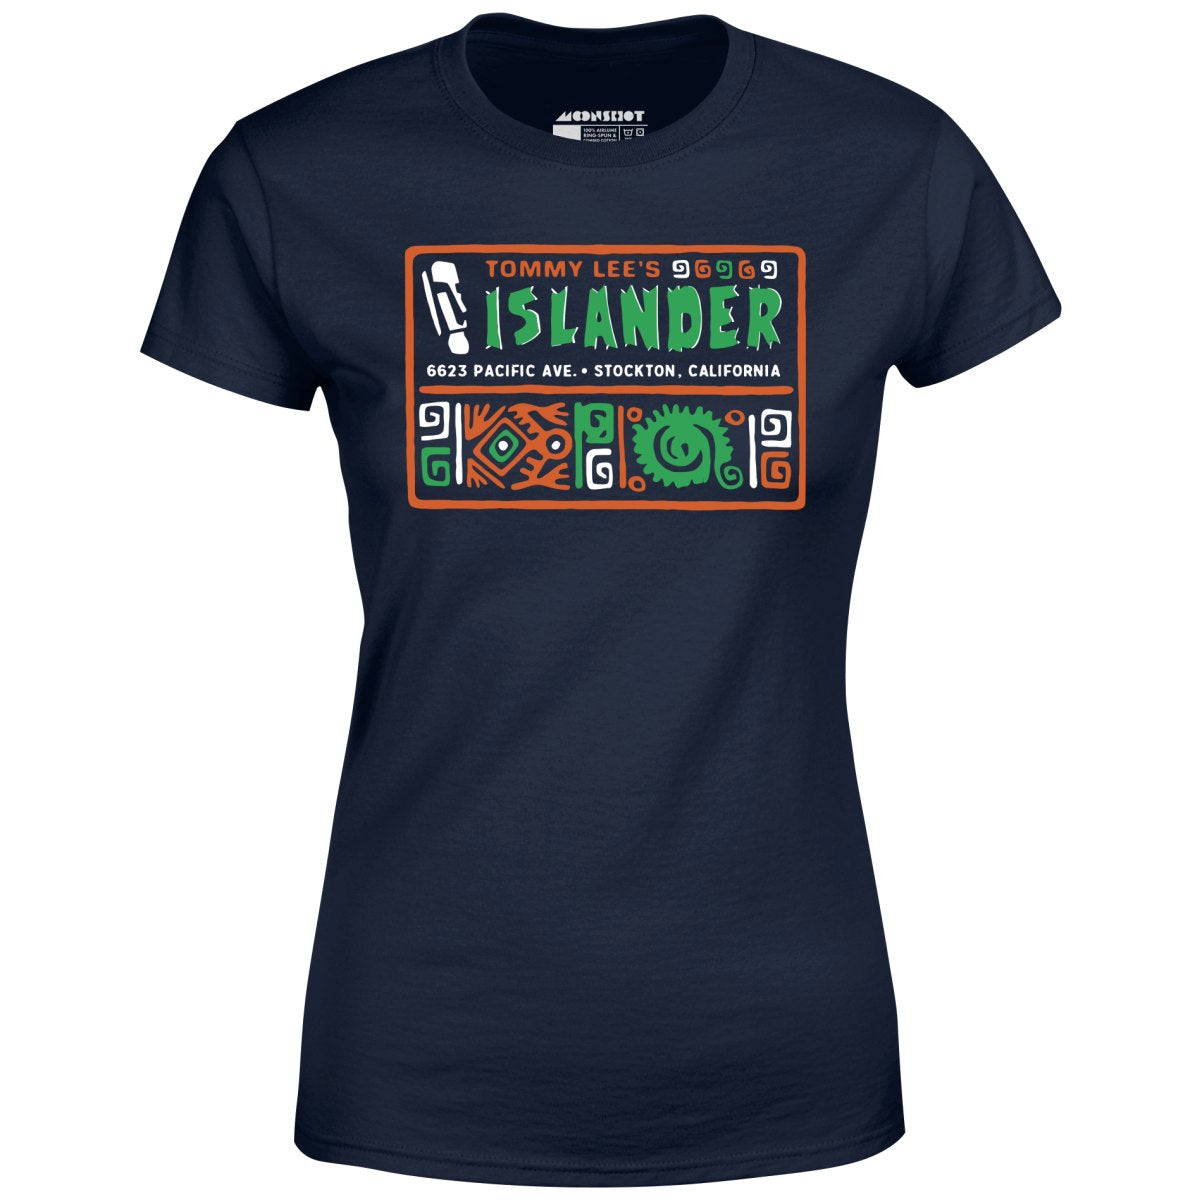 Tommy Lee's Islander - Stockton, CA - Vintage Tiki Bar - Women's T-Shirt